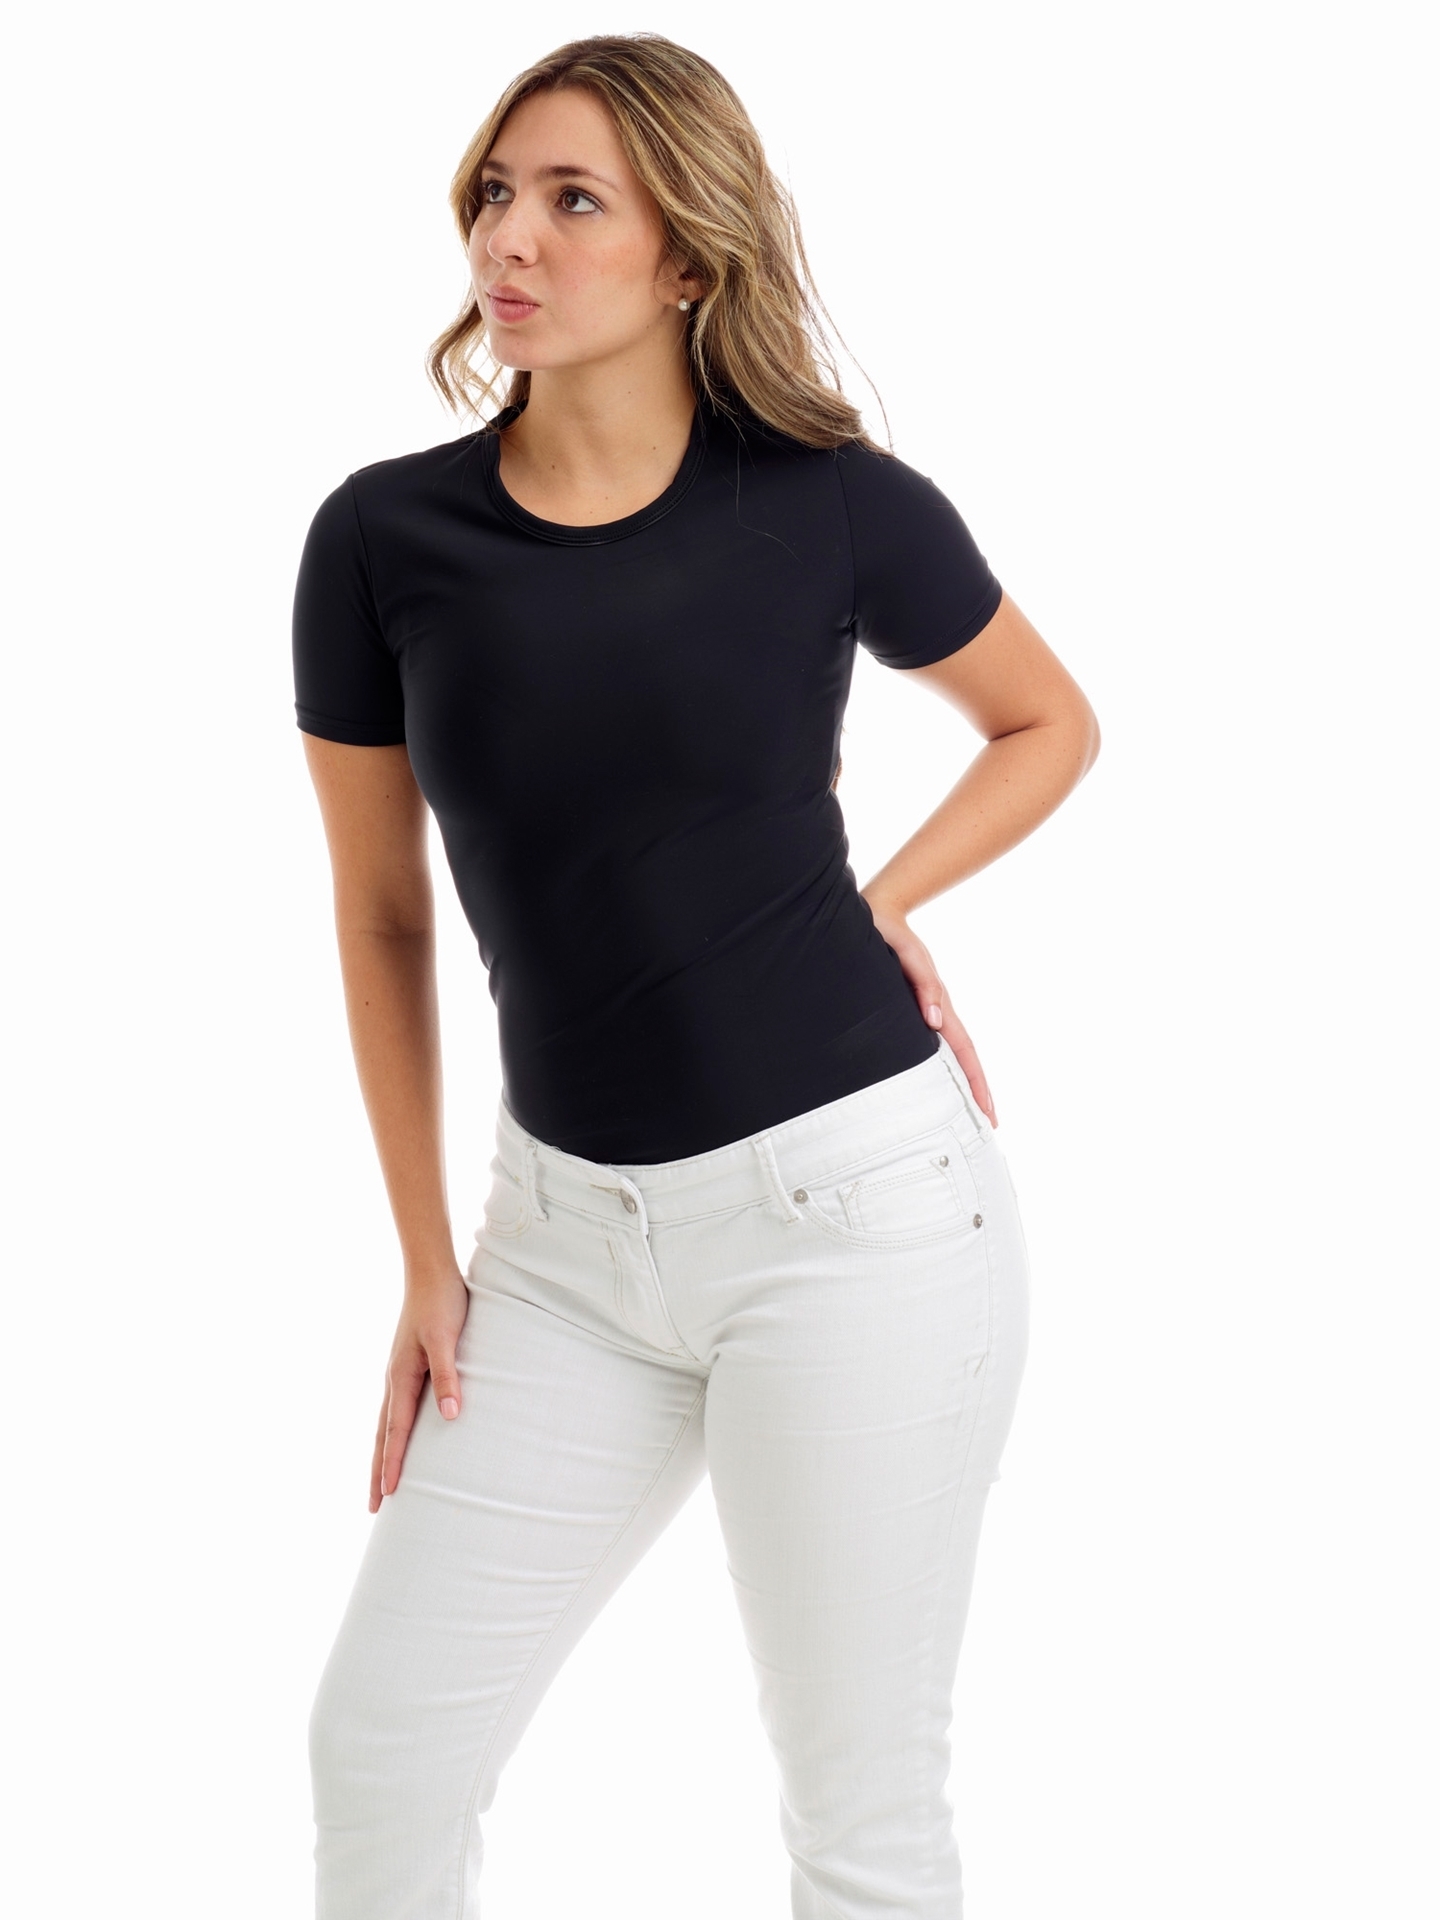 Underworks Microfiber Sleeveless Compression Shirt 3-PACK -  Black-Dark-Grey-White - XS